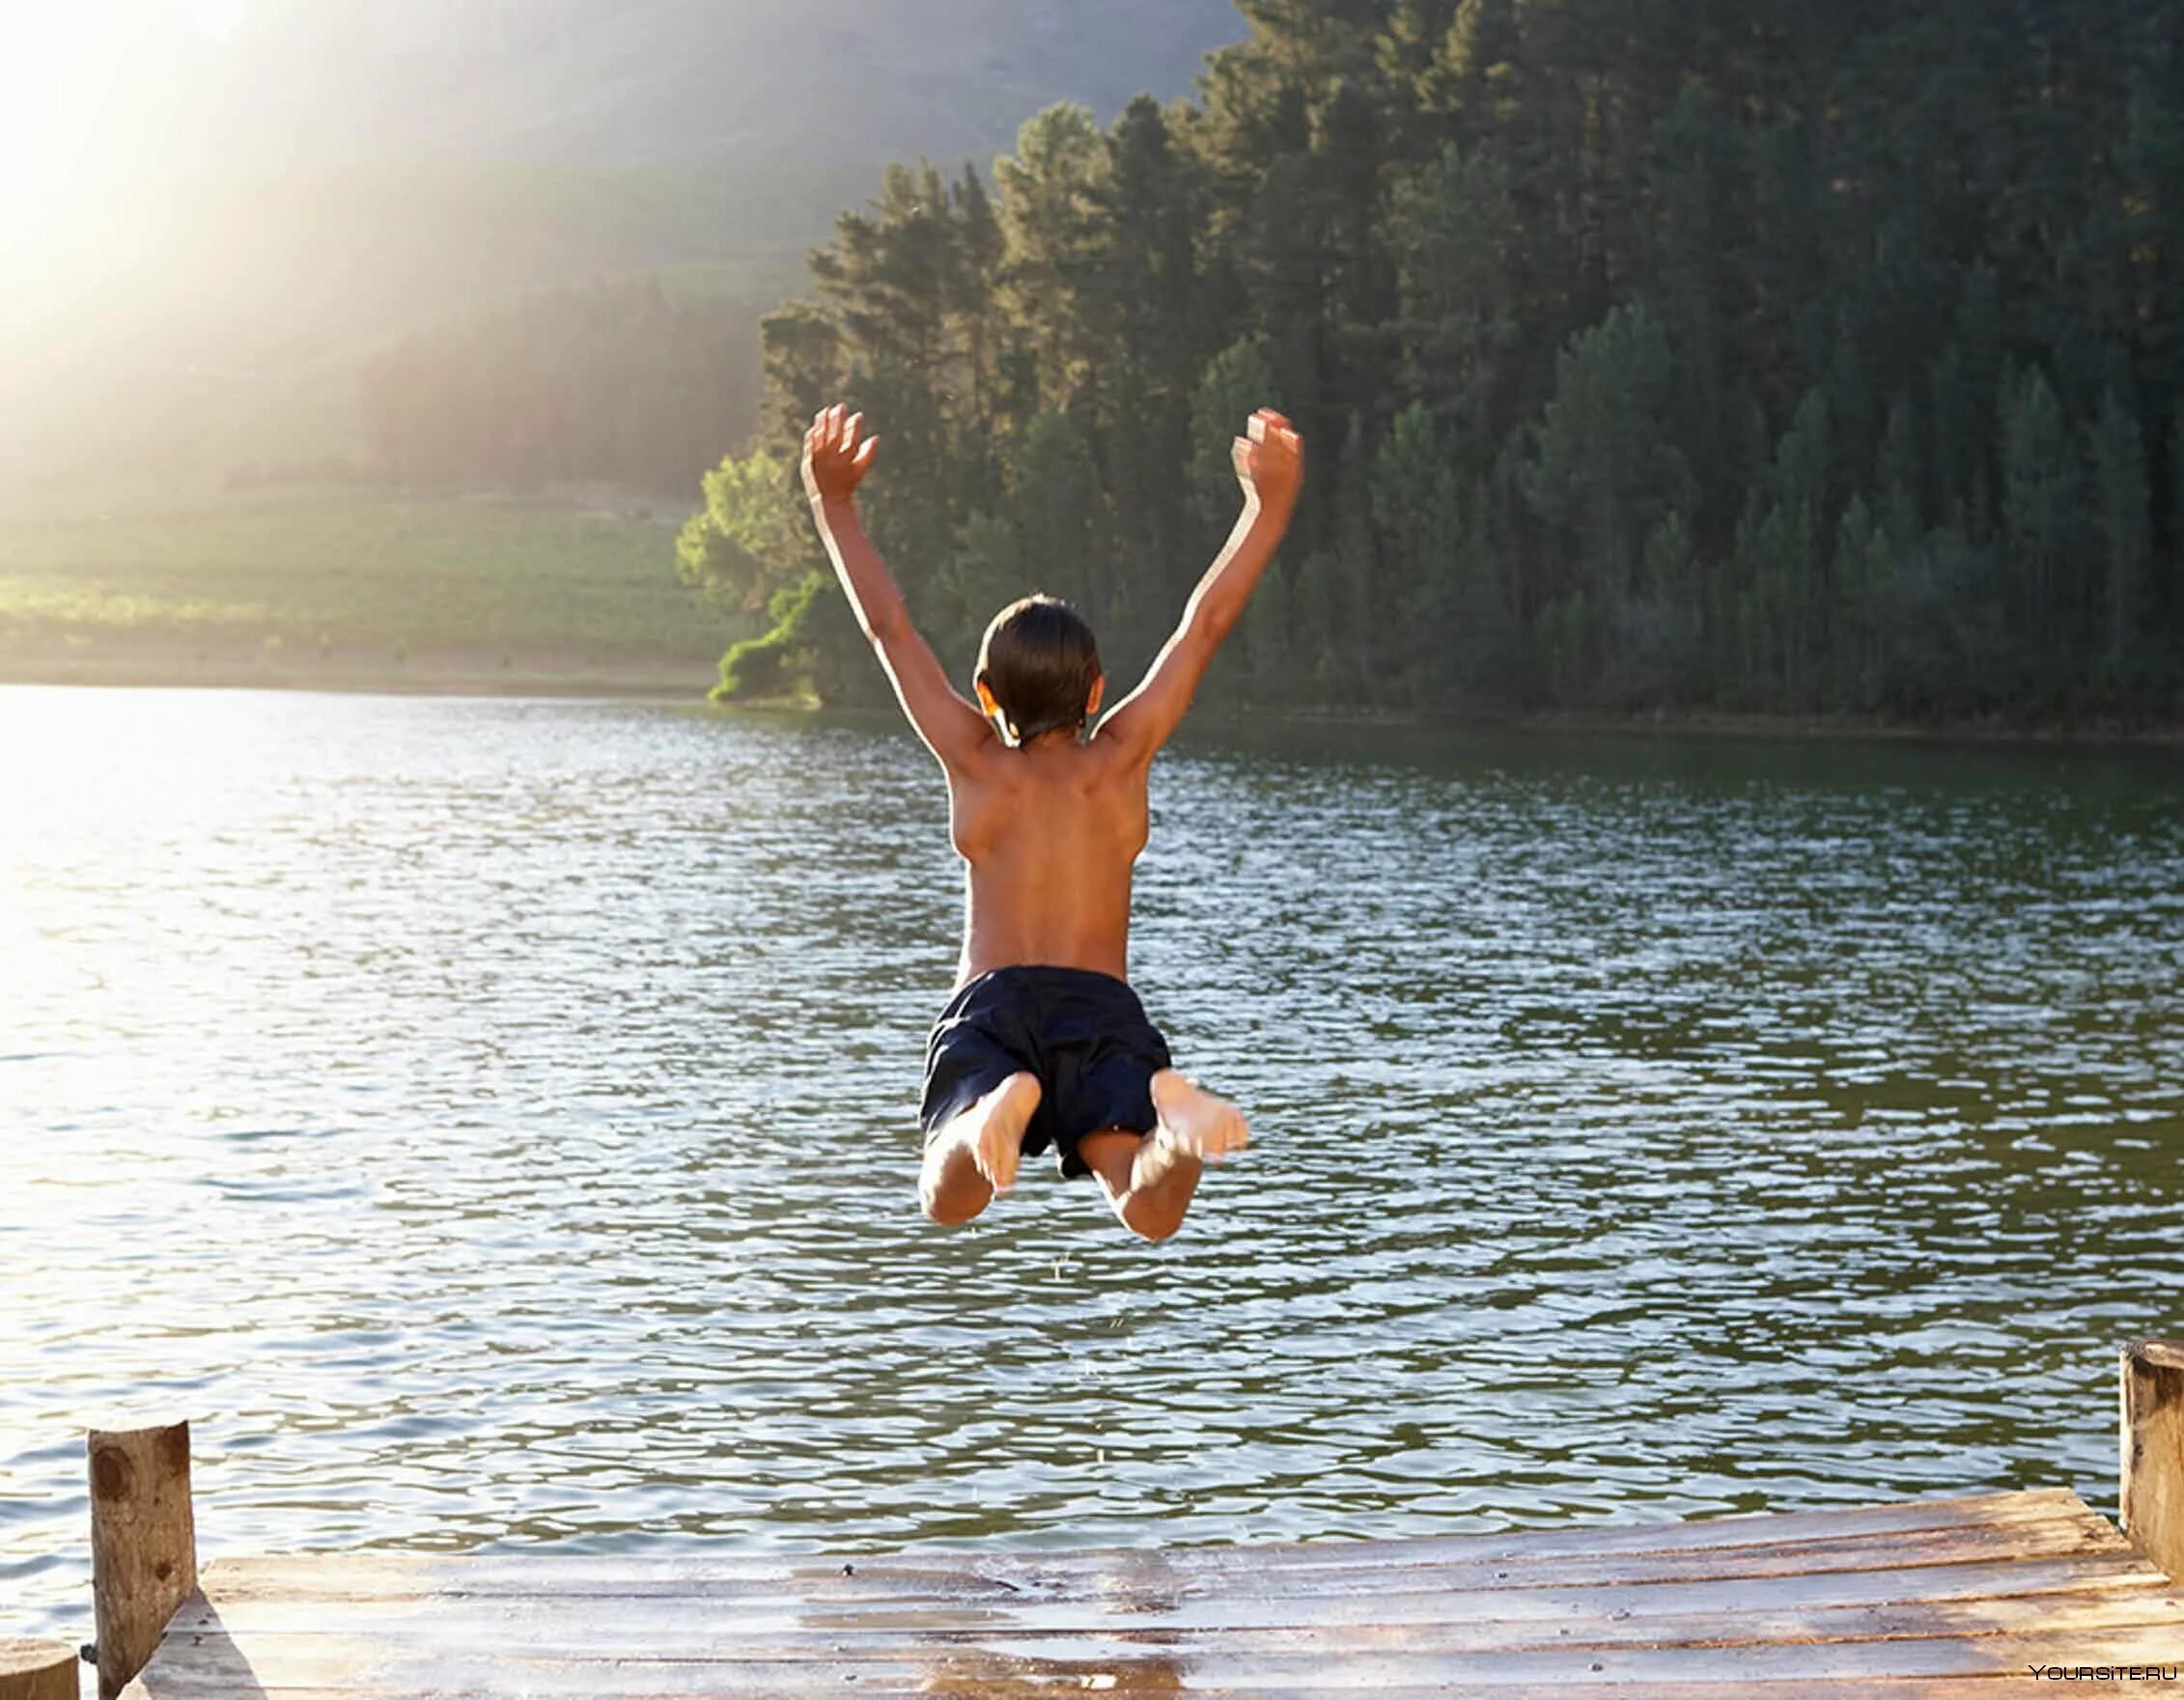 Прыгают в озеро. Дети купаются ВМ озере. Дети прыгают в воду. Купание на речке. На реке на озере работал